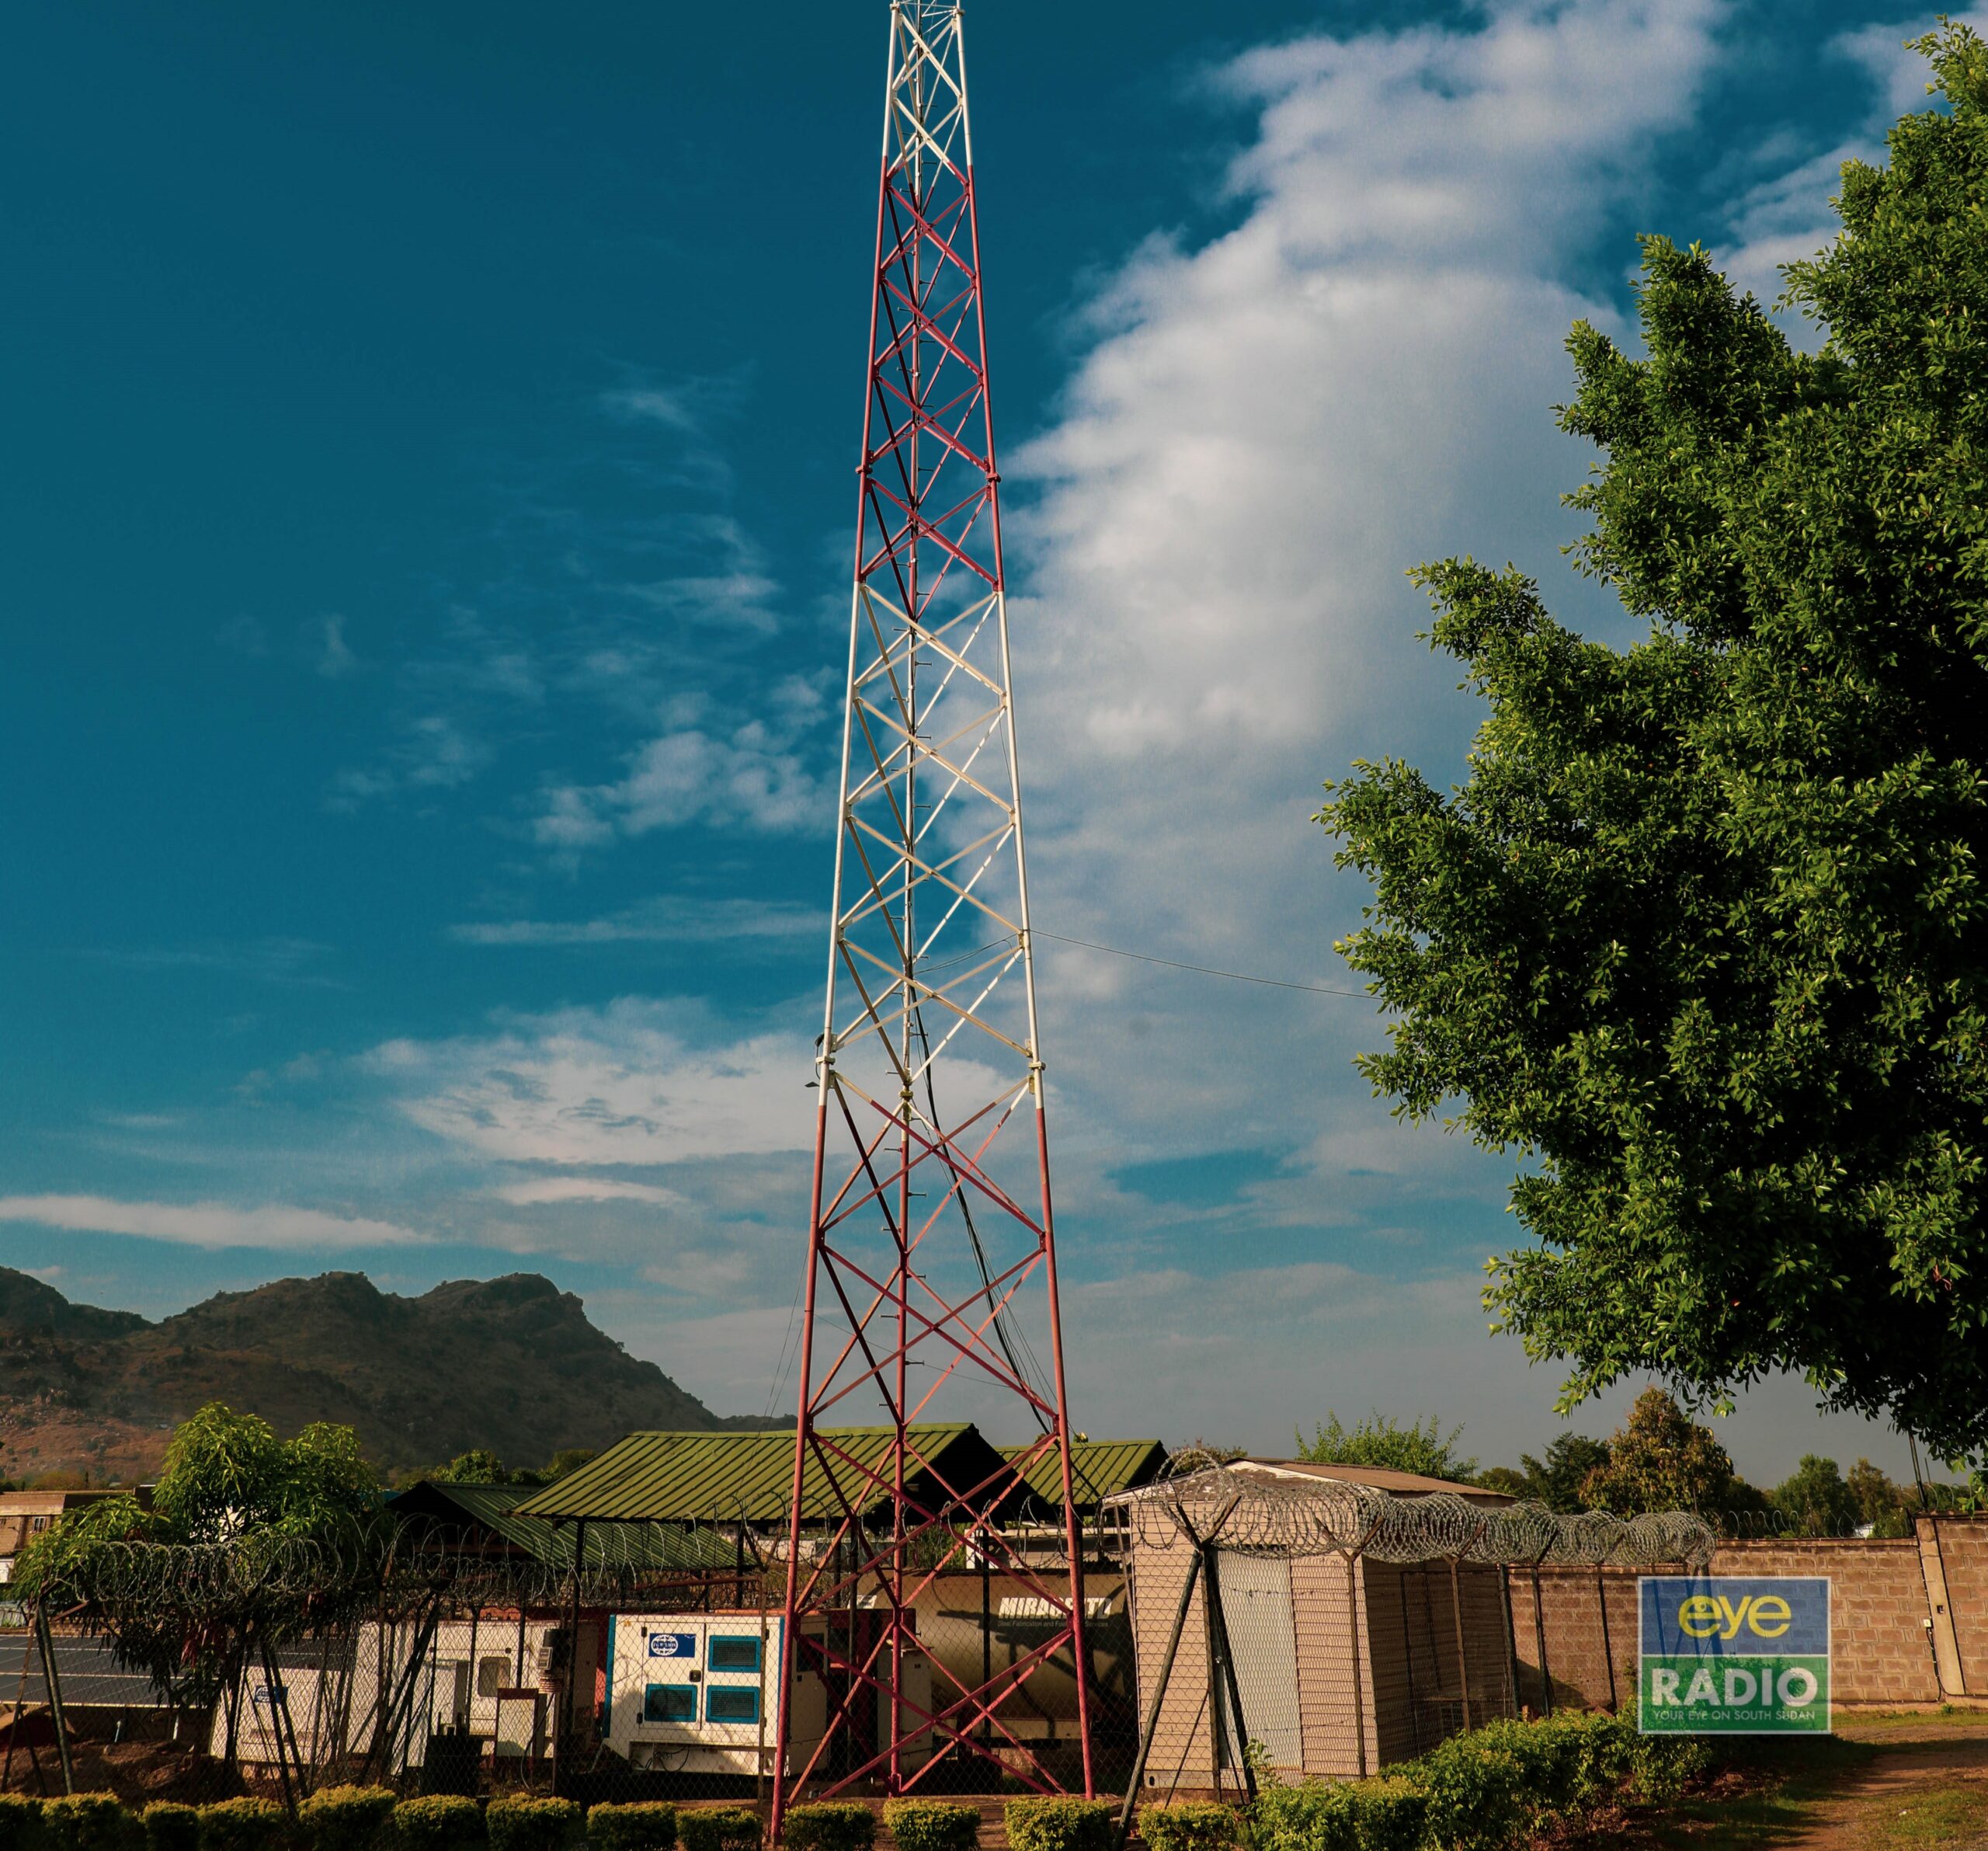 Eye Radio extends service to Baliet, Malakal in Upper Nile